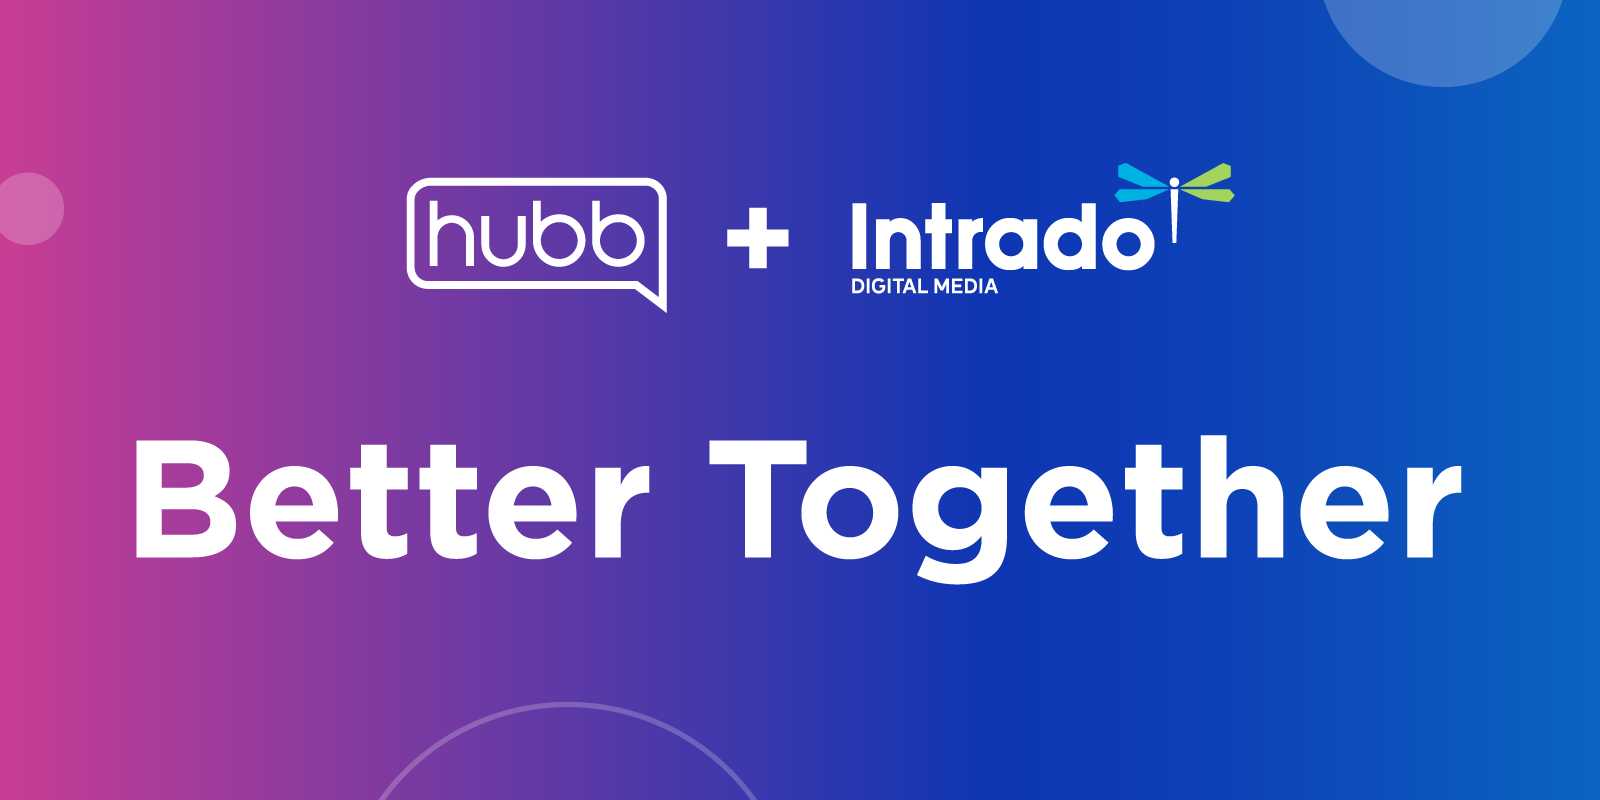 Hubb + Intrado Digital Media. Better Together